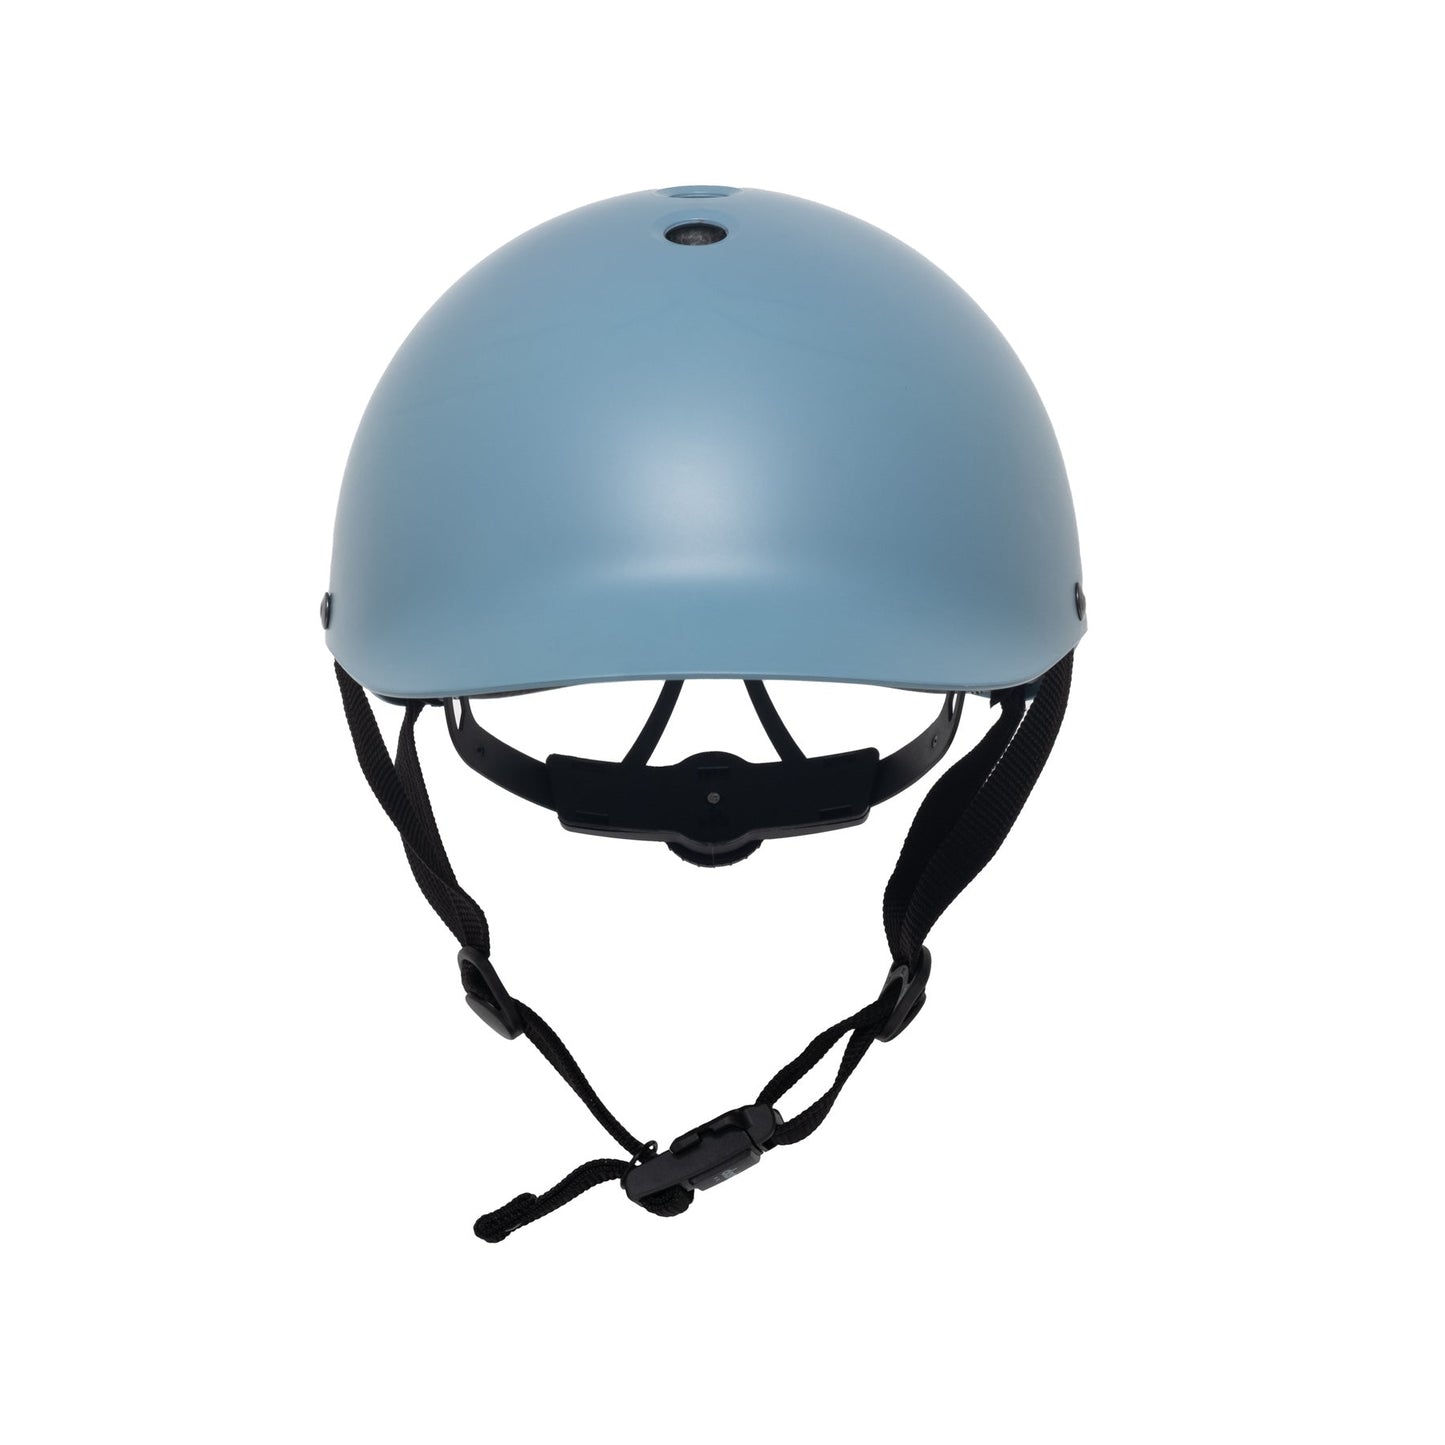 Dashel Ocean Edition Helmet